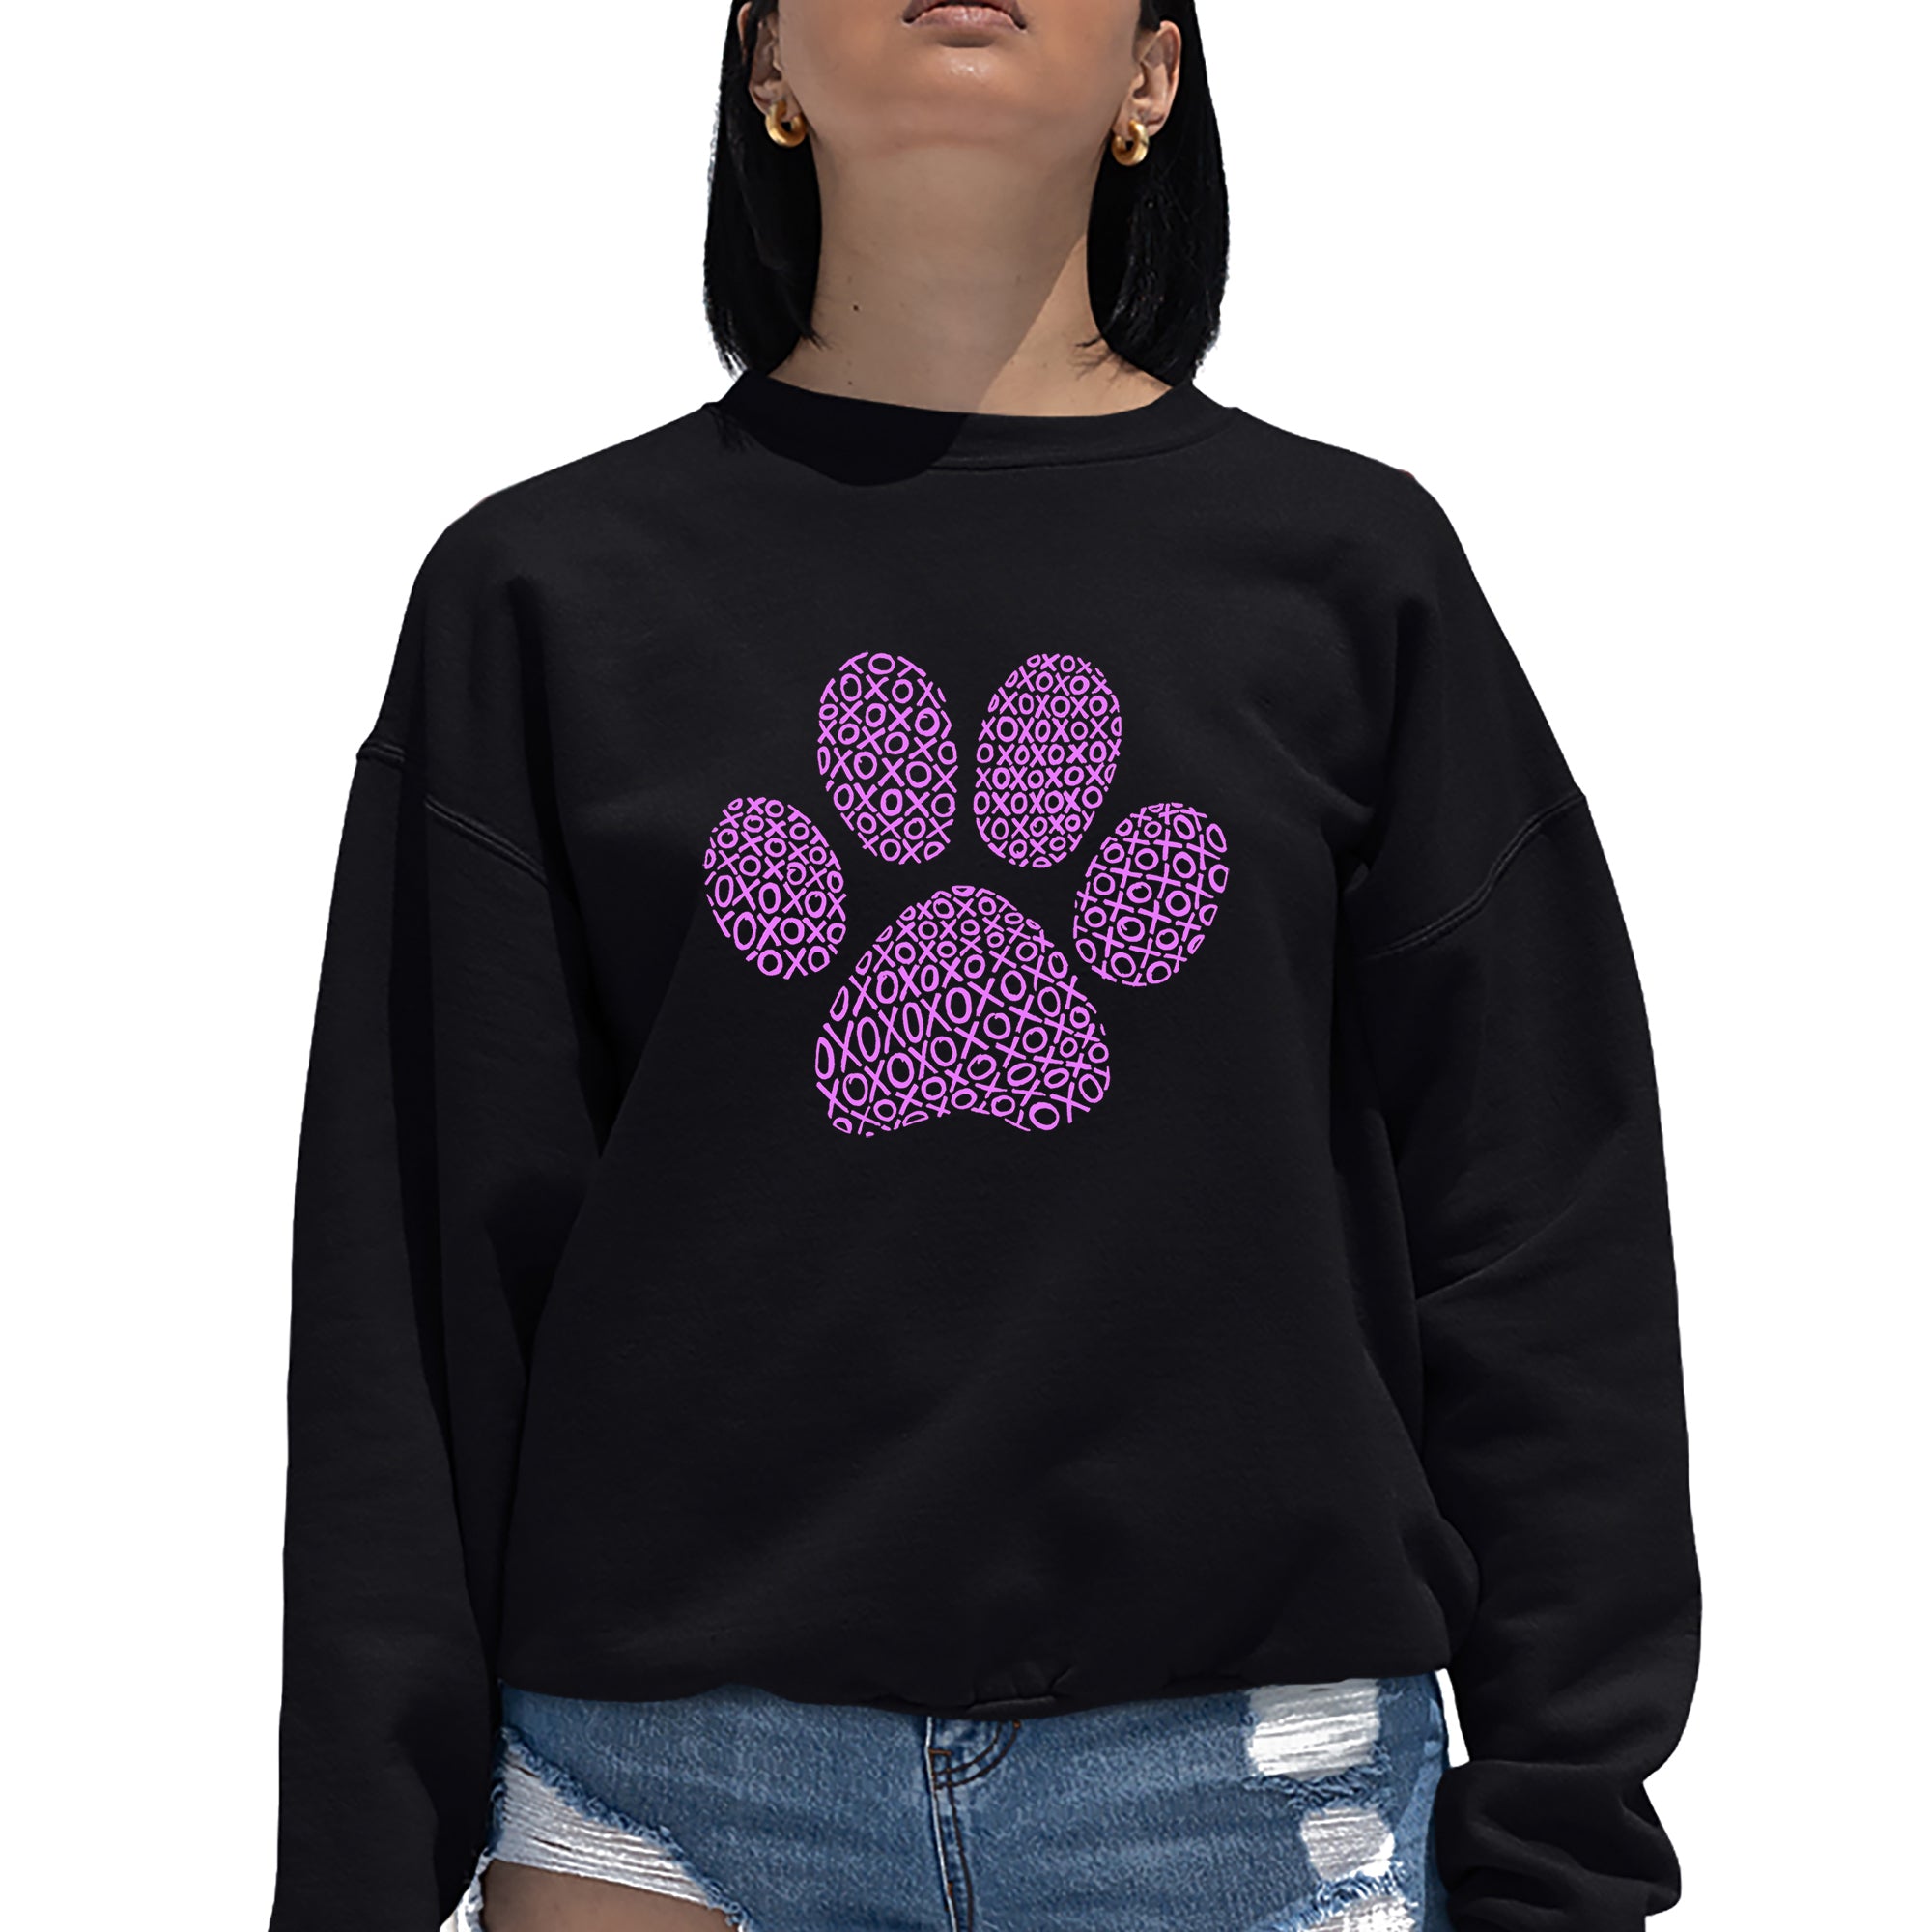 XOXO Dog Paw - Women's Word Art Crewneck Sweatshirt - Black - Small